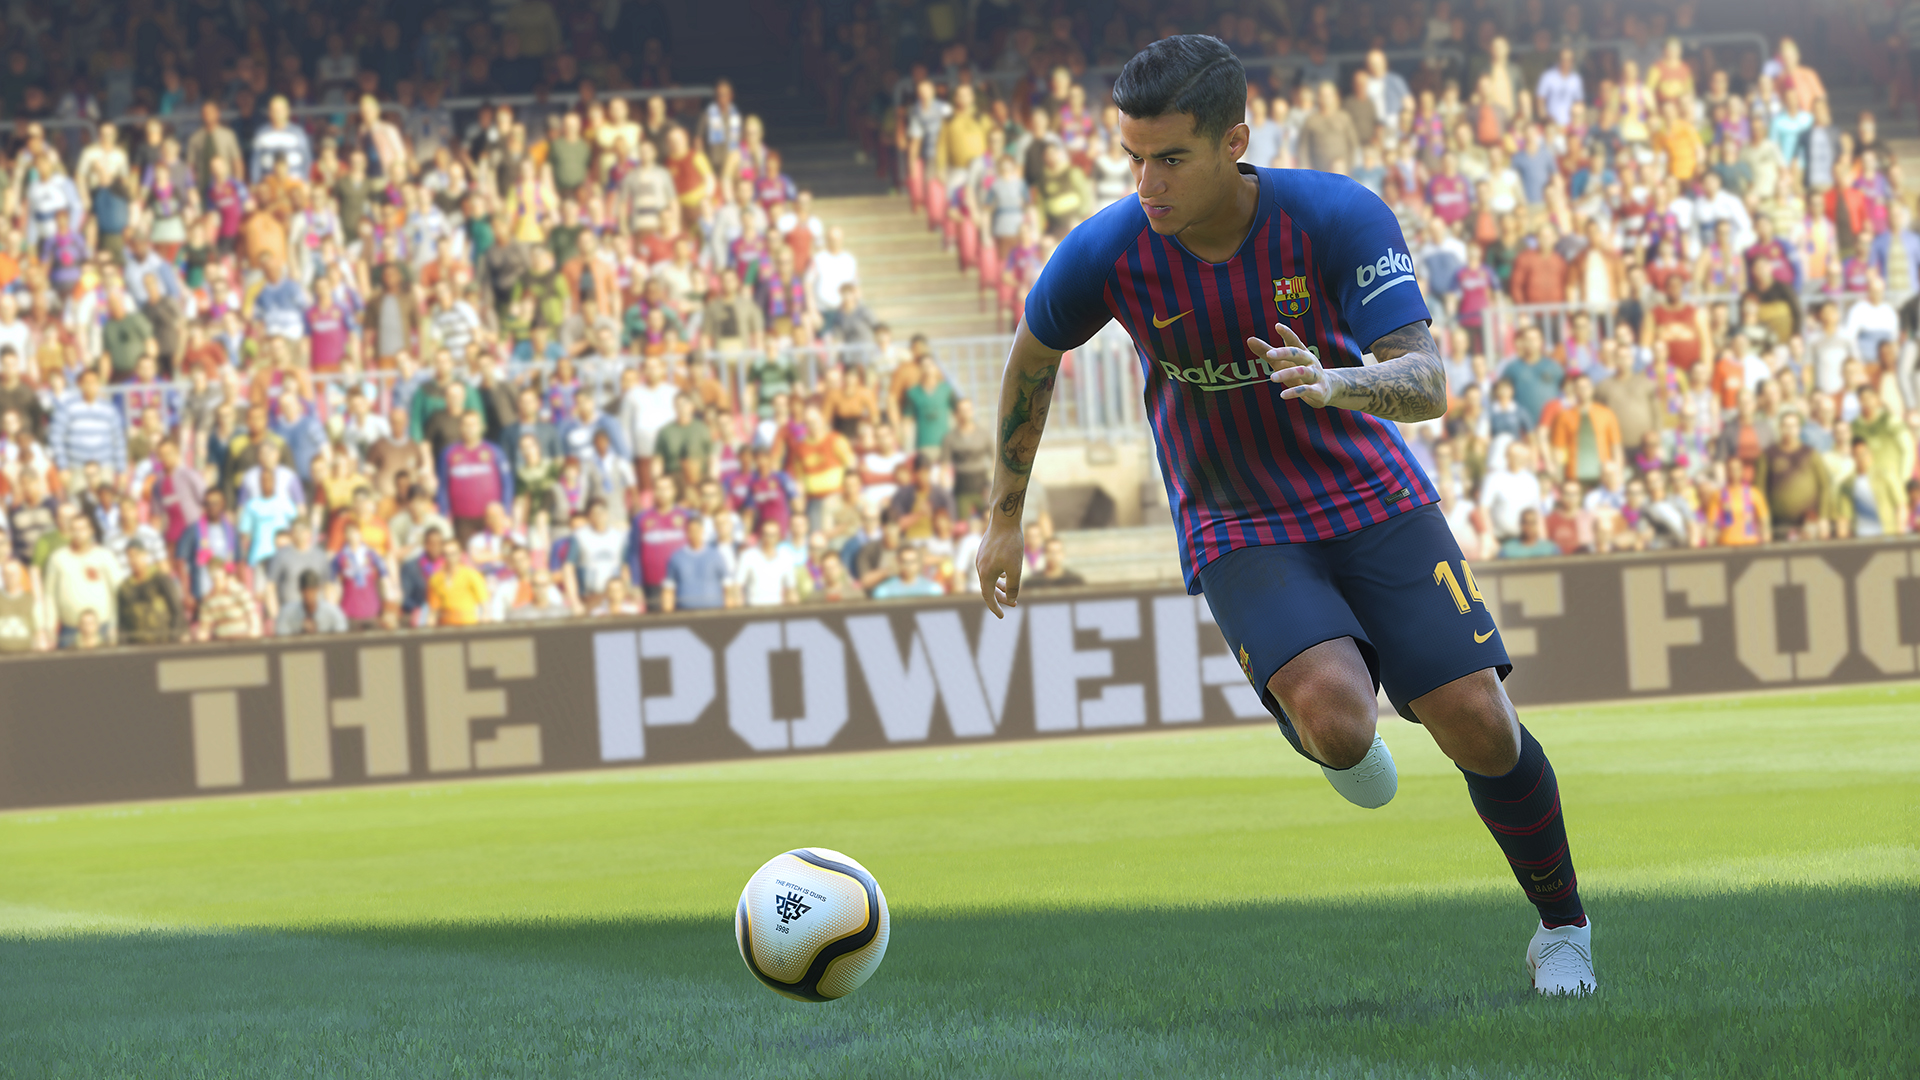 PES 2019 Konami Pro Evolution Soccer 2019 Fußball Simulation PS4 Xbox One Game Test Review Kritik Stellungsspiel